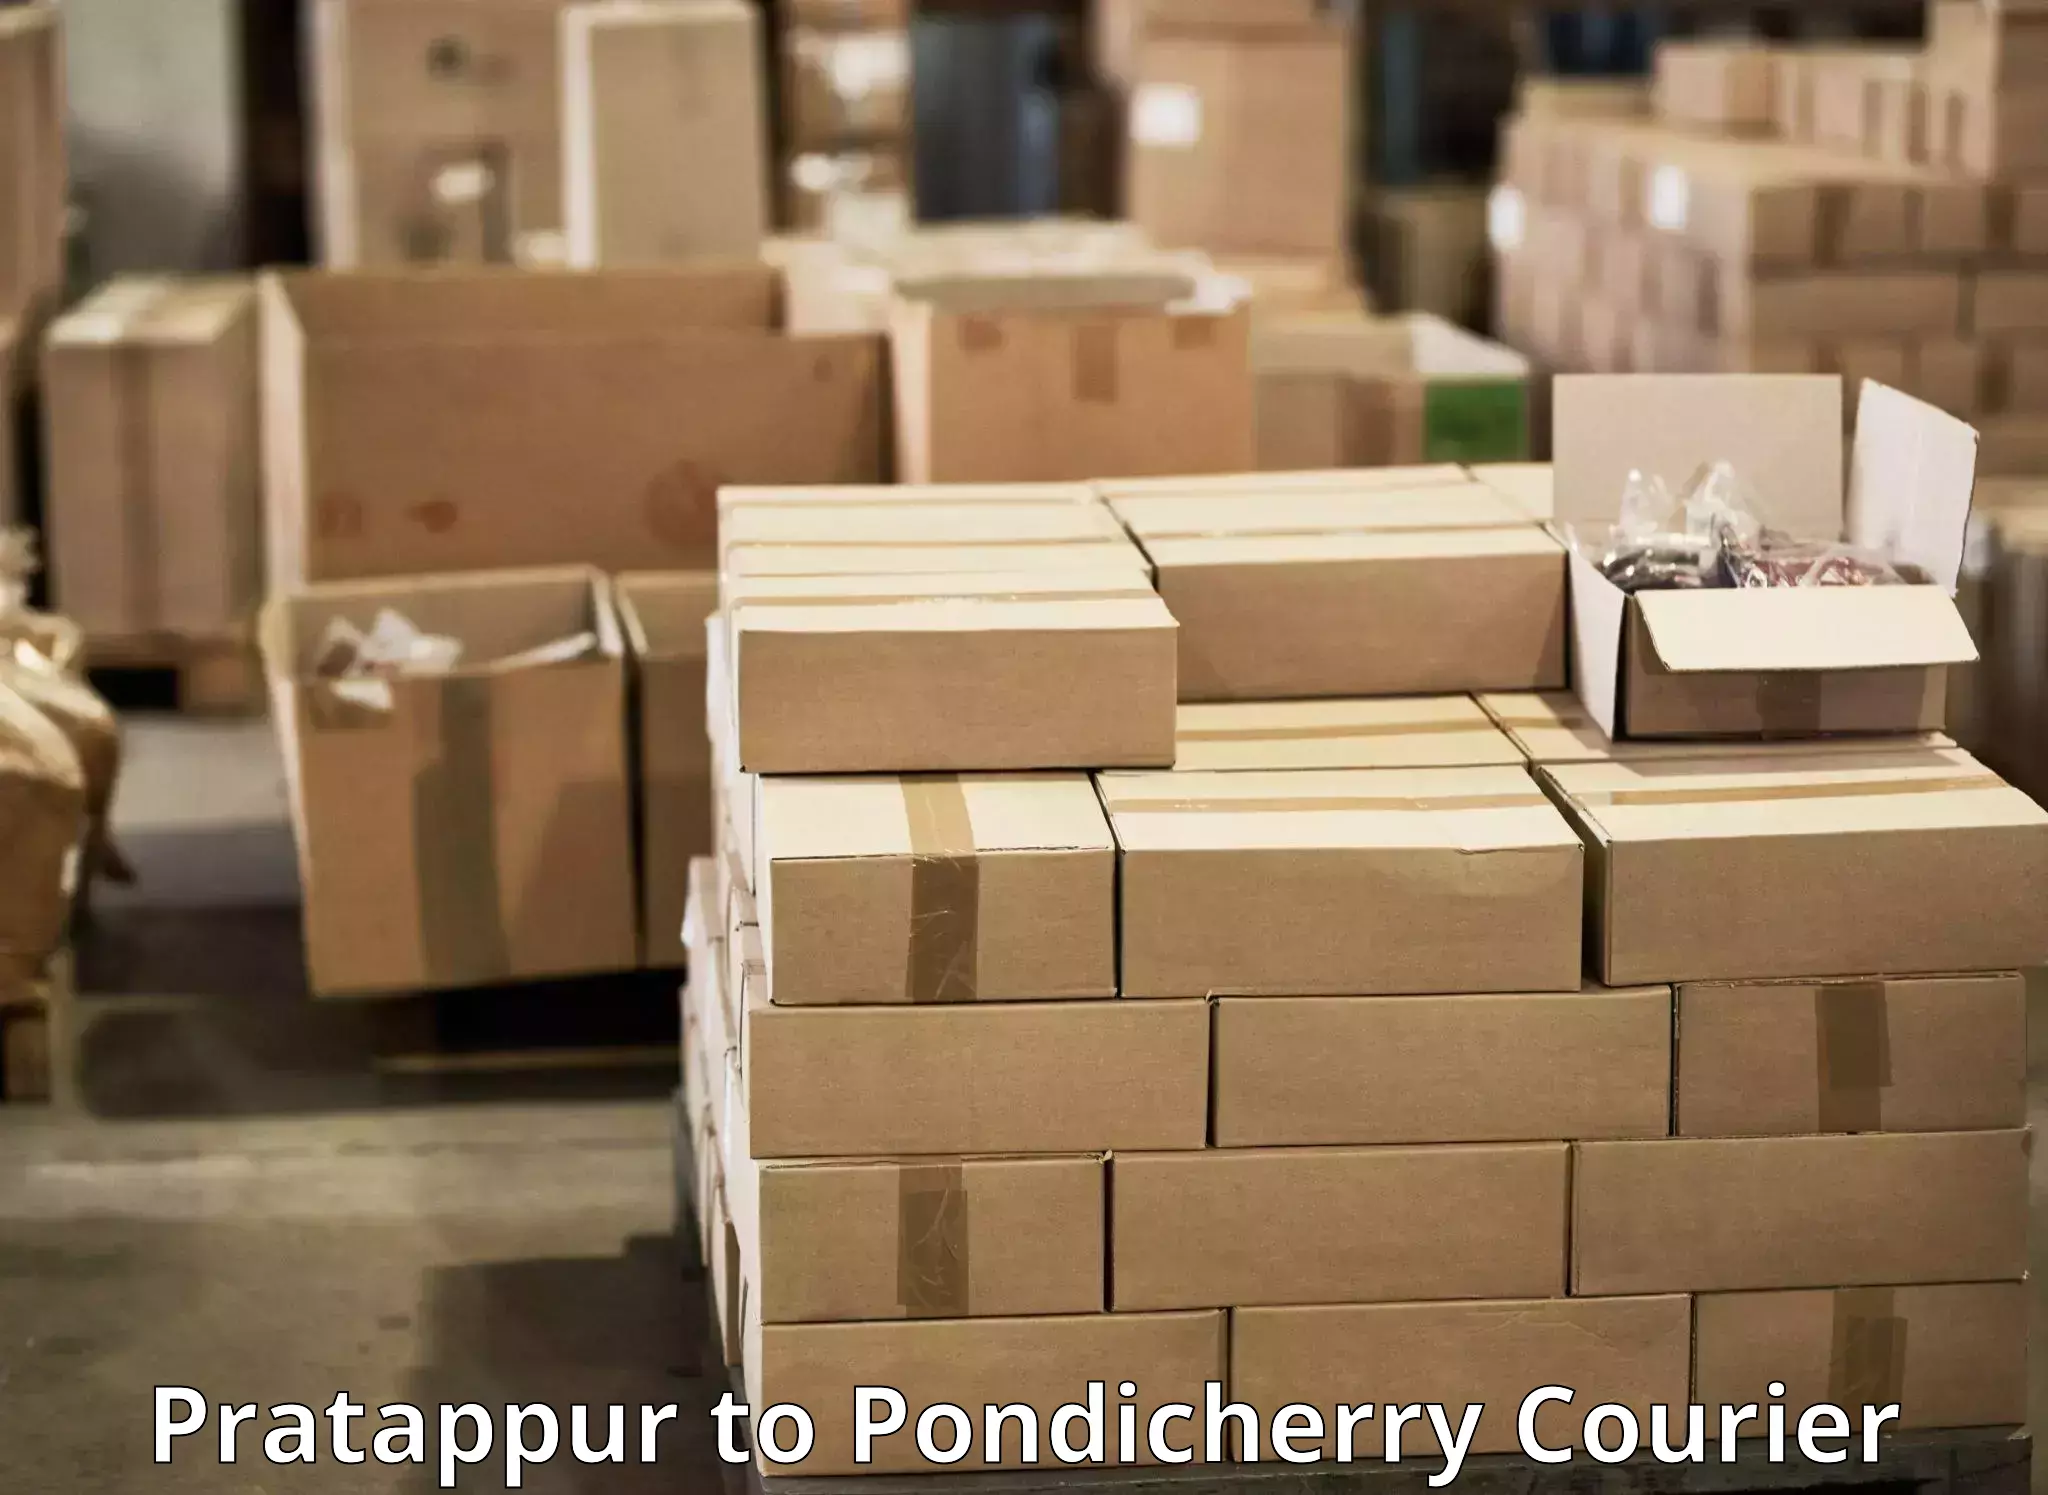 Courier service innovation Pratappur to Pondicherry